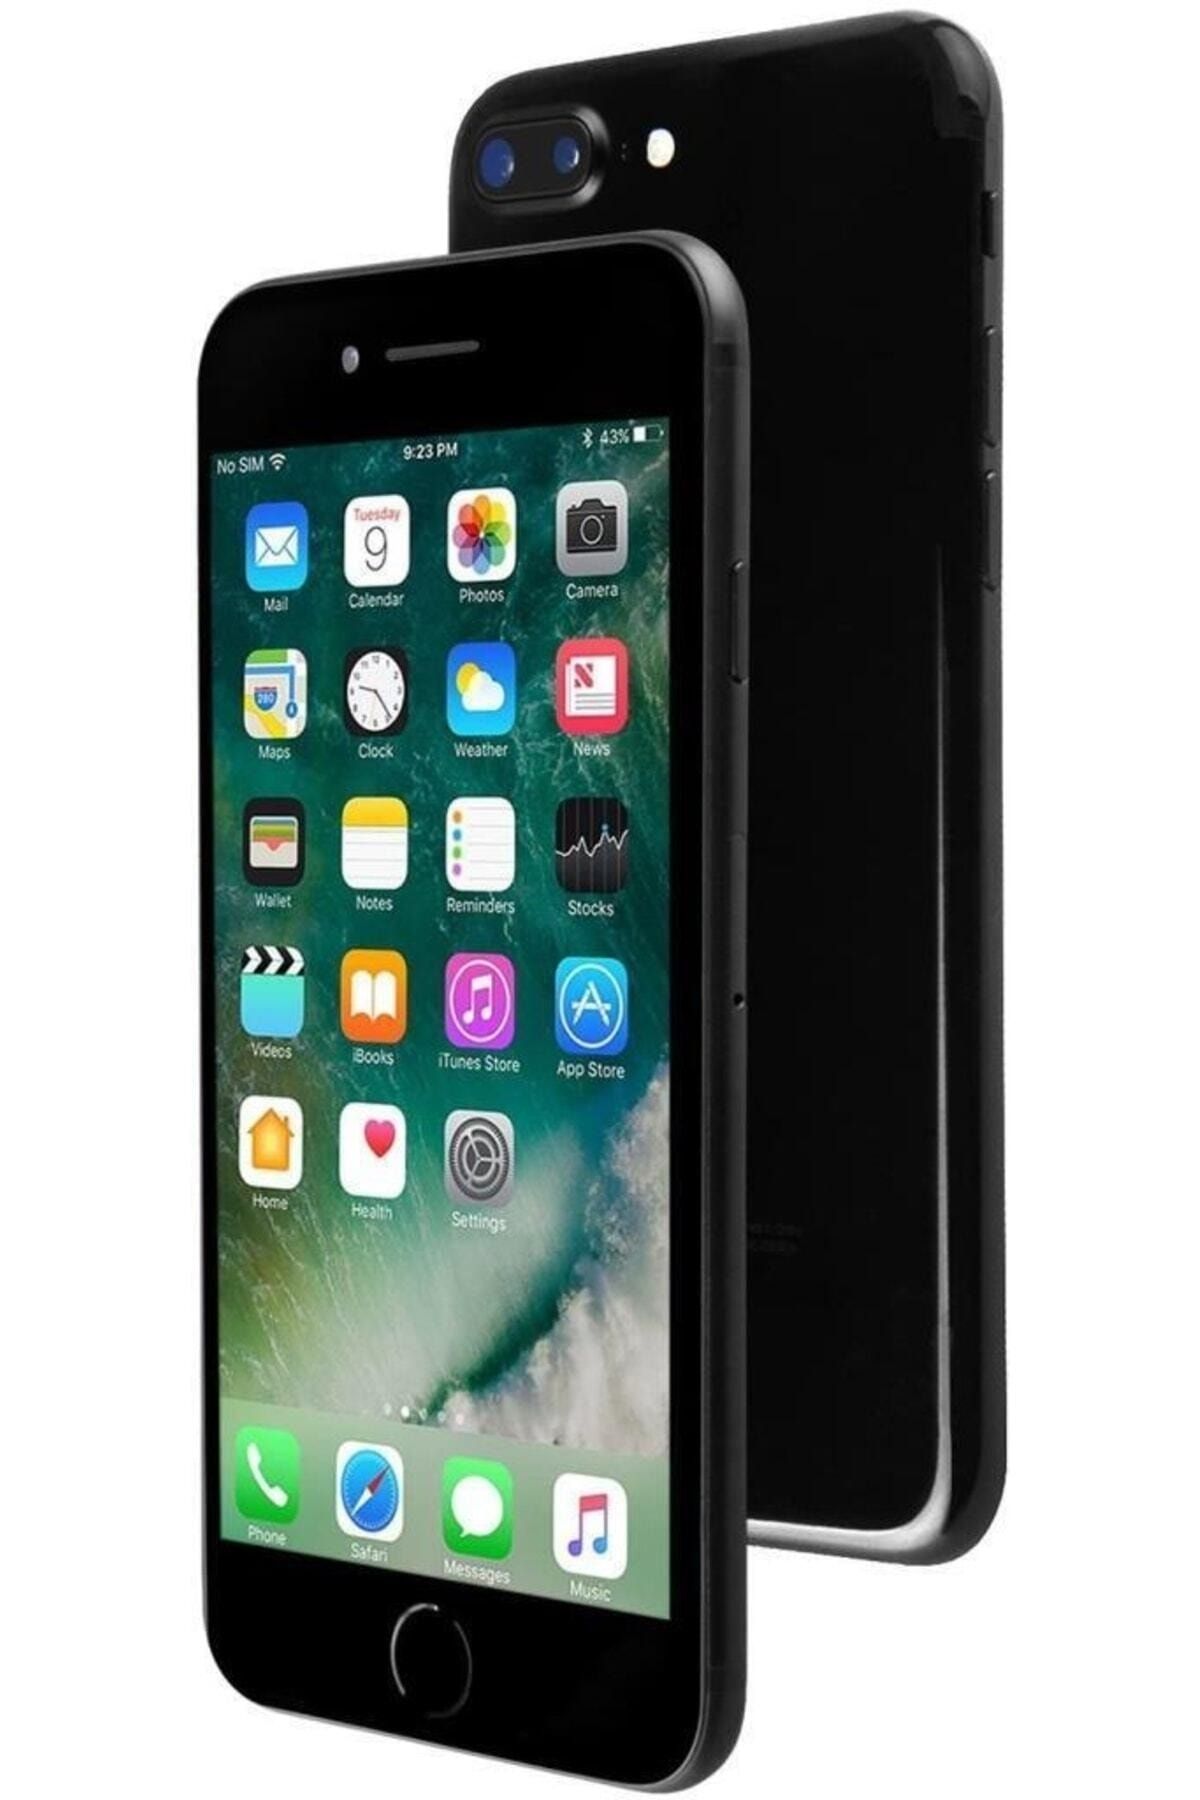 Apple Yenilenmiş iPhone 7 256 GB Jet Black 12 Ay Garantili